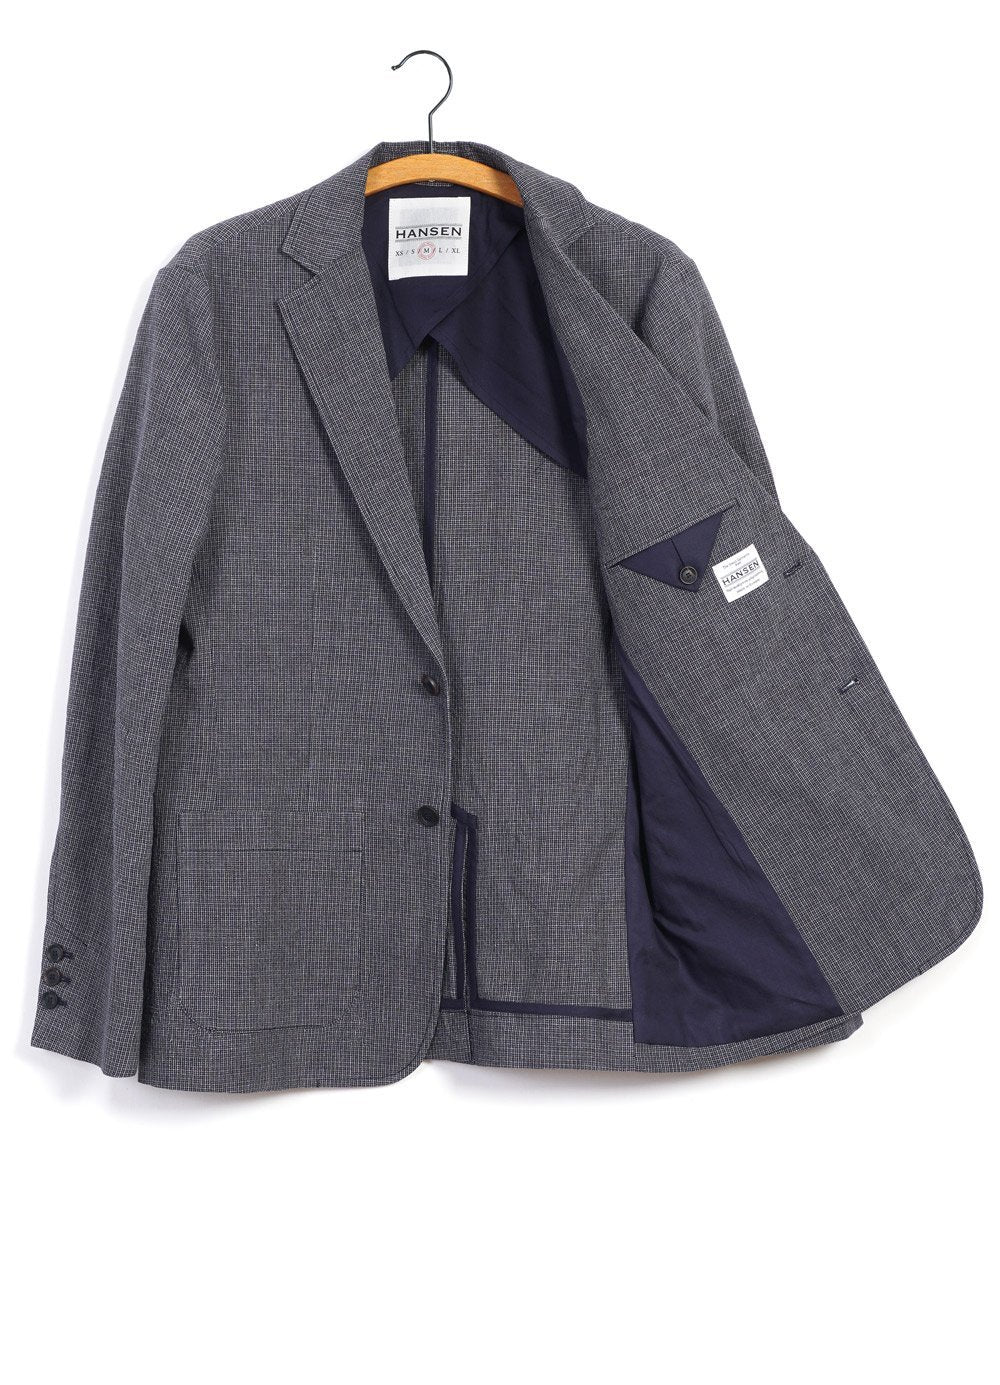 HANSEN GARMENTS - CHRIS | Two Button Classic Blazer | River - HANSEN Garments